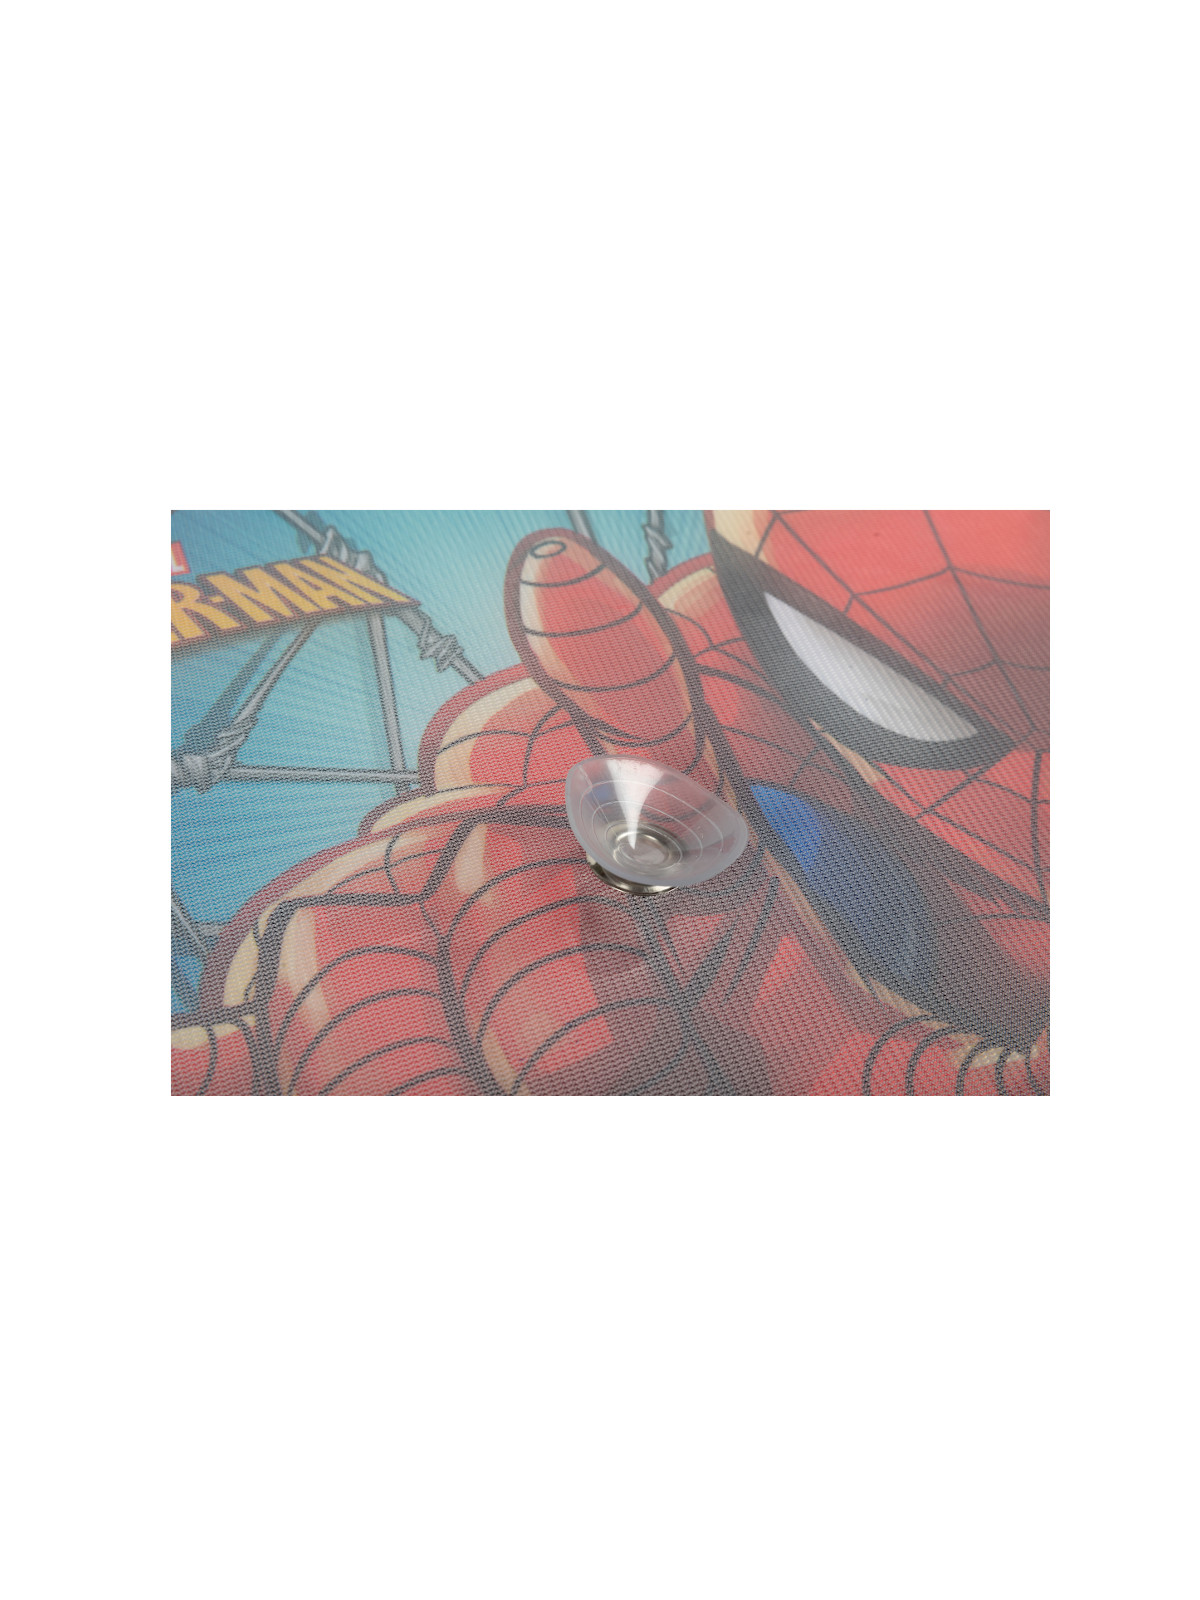 Tendine laterali marvel spiderman 44x35 cm - 2 pezzi - MARVEL